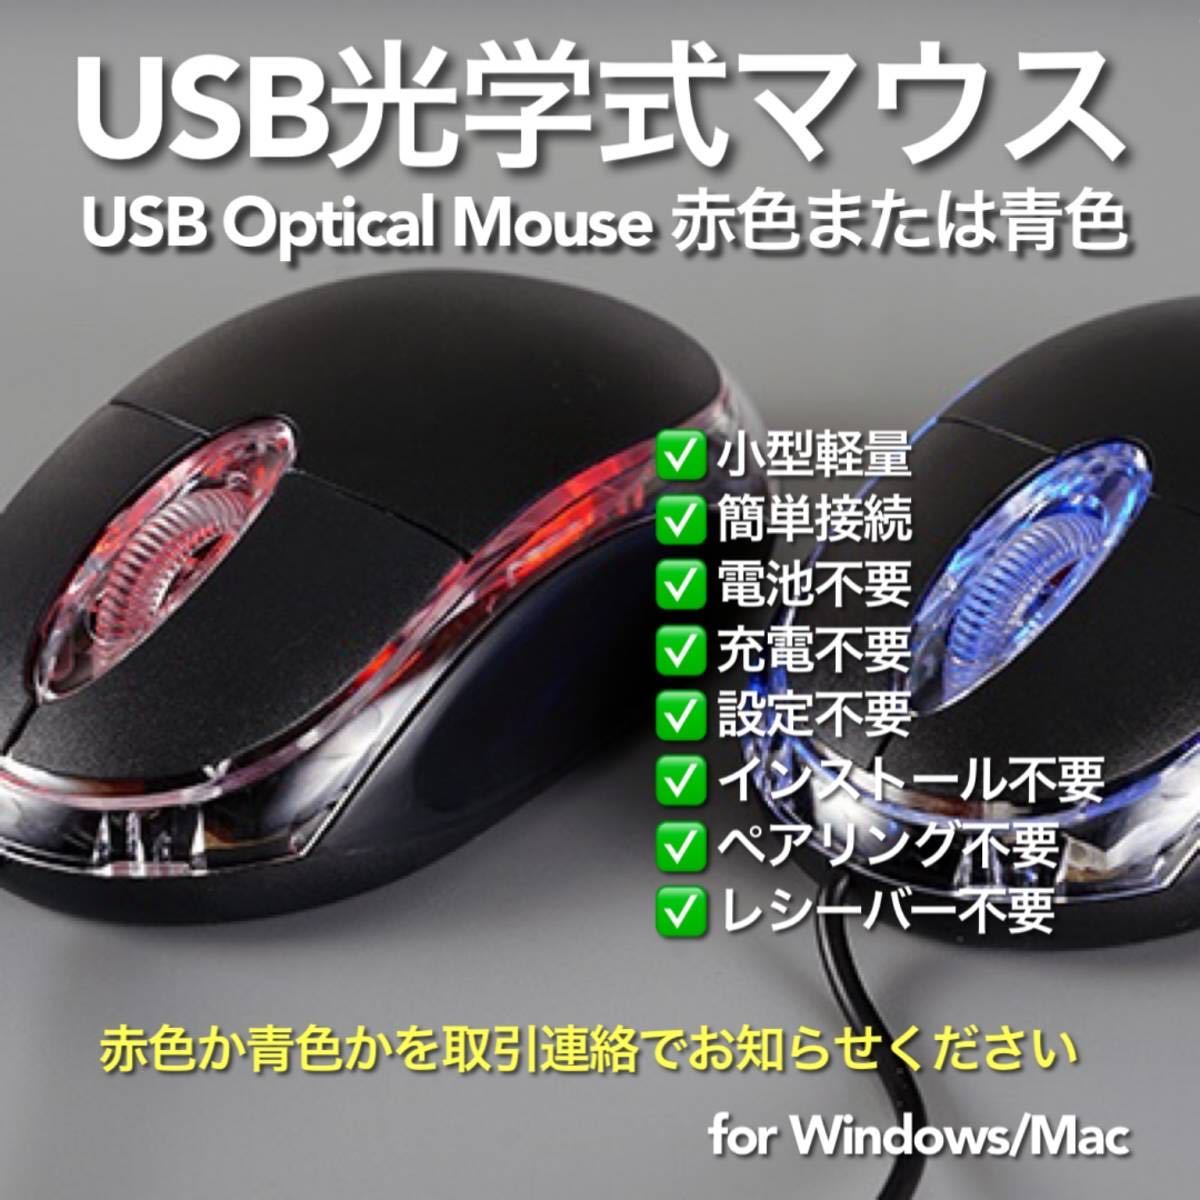 USBマウス 有線 光学式 赤青どちらか1個 Optical Mouse #2 在宅勤務 テレワーク リモートワーク 遠隔授業 リモート授業_画像1